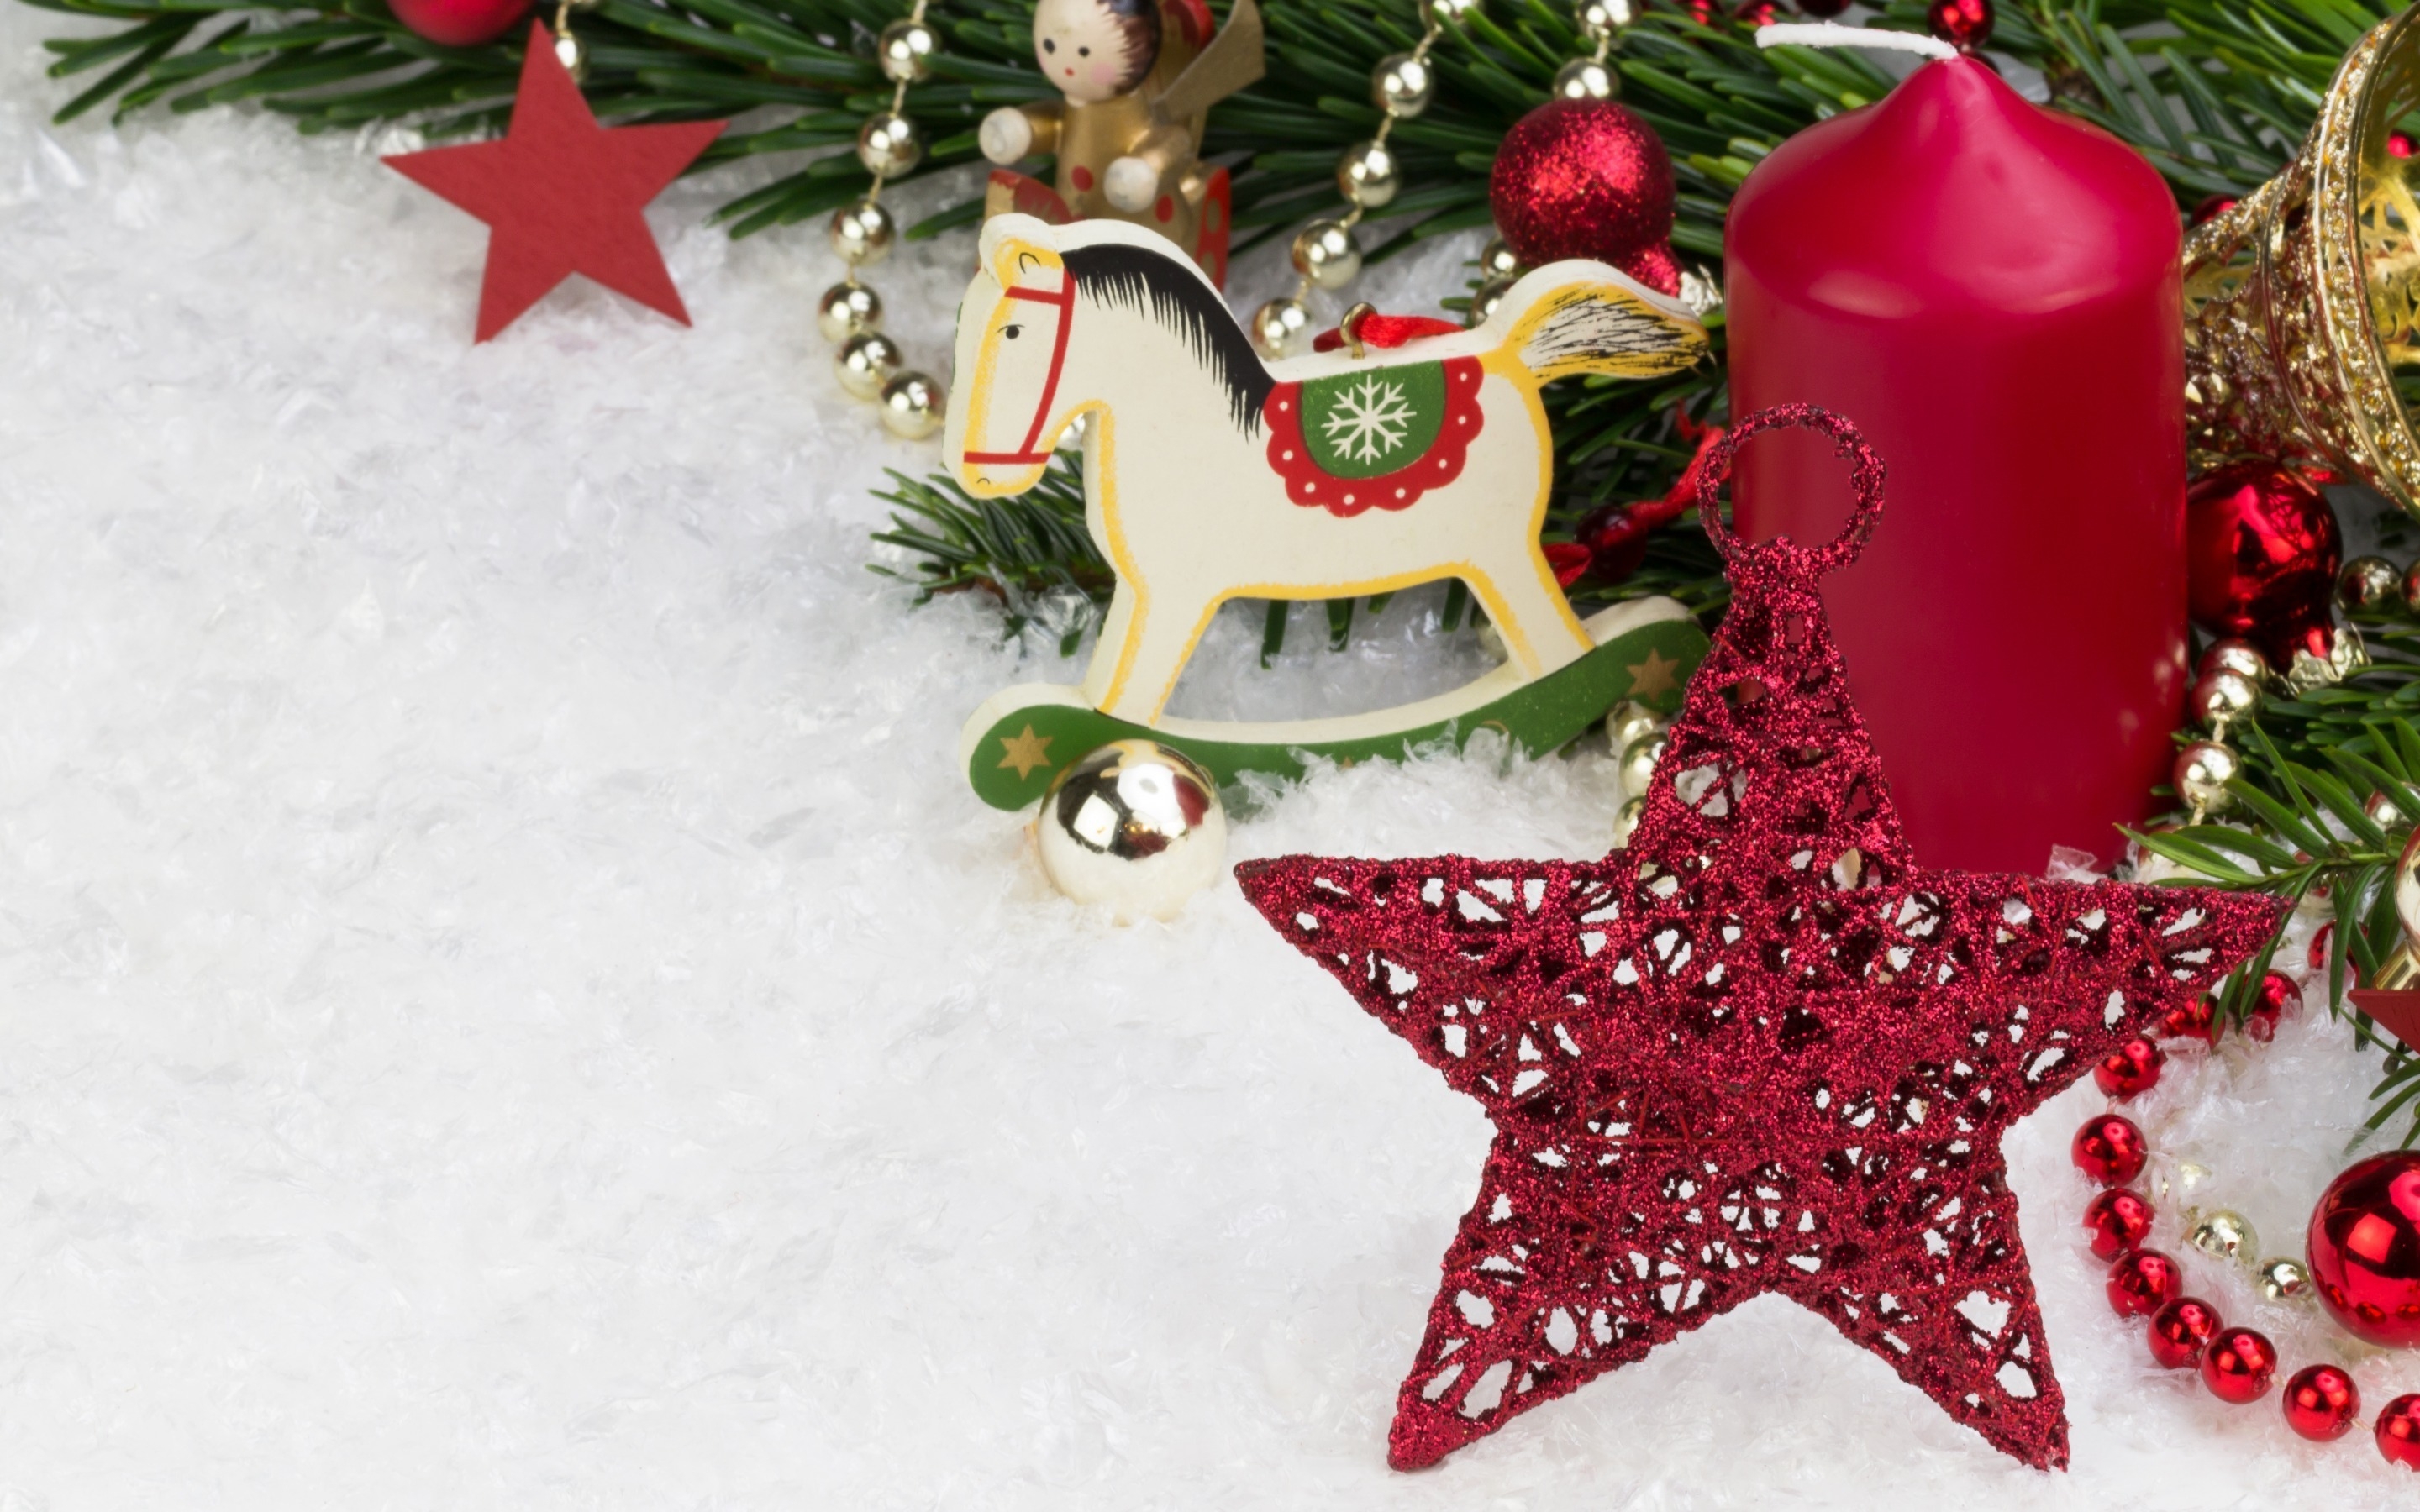 2014 Small Christmas Ornaments for 2880 x 1800 Retina Display resolution